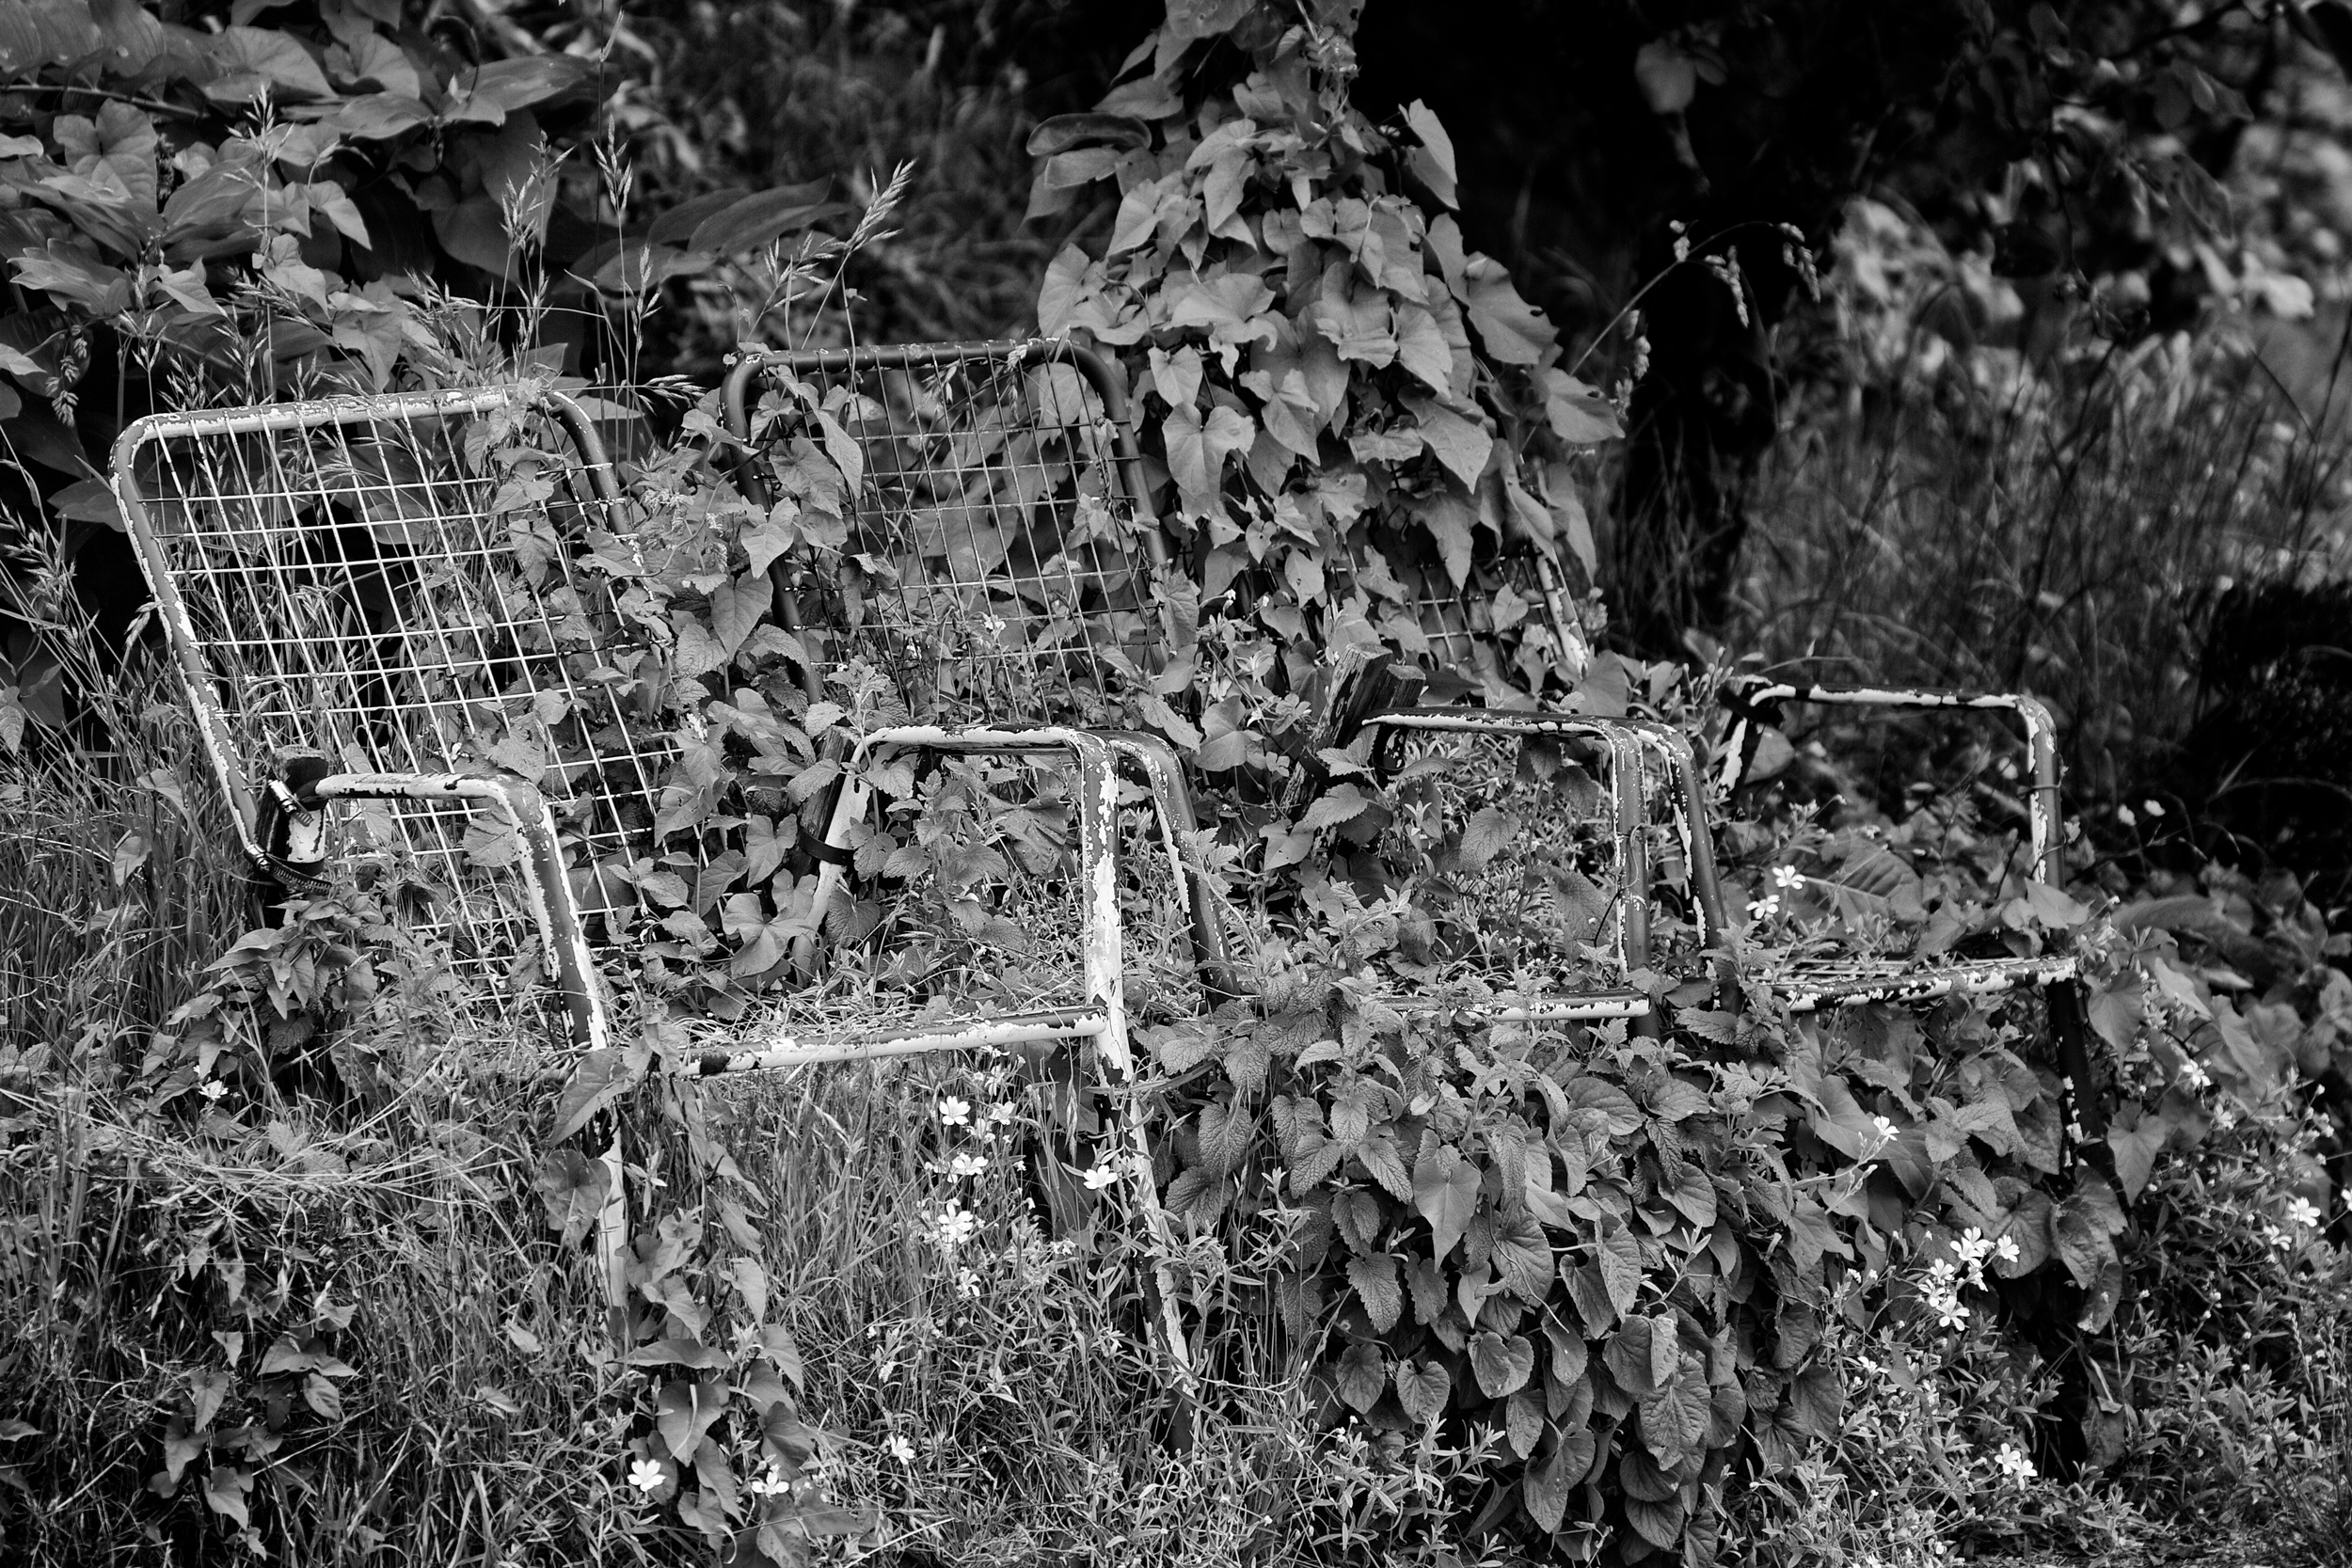 2013-06-08 at 10-54-30 Black & White, Ivy, Jungle, Lawn Chair, Still Life, Street Life.jpg